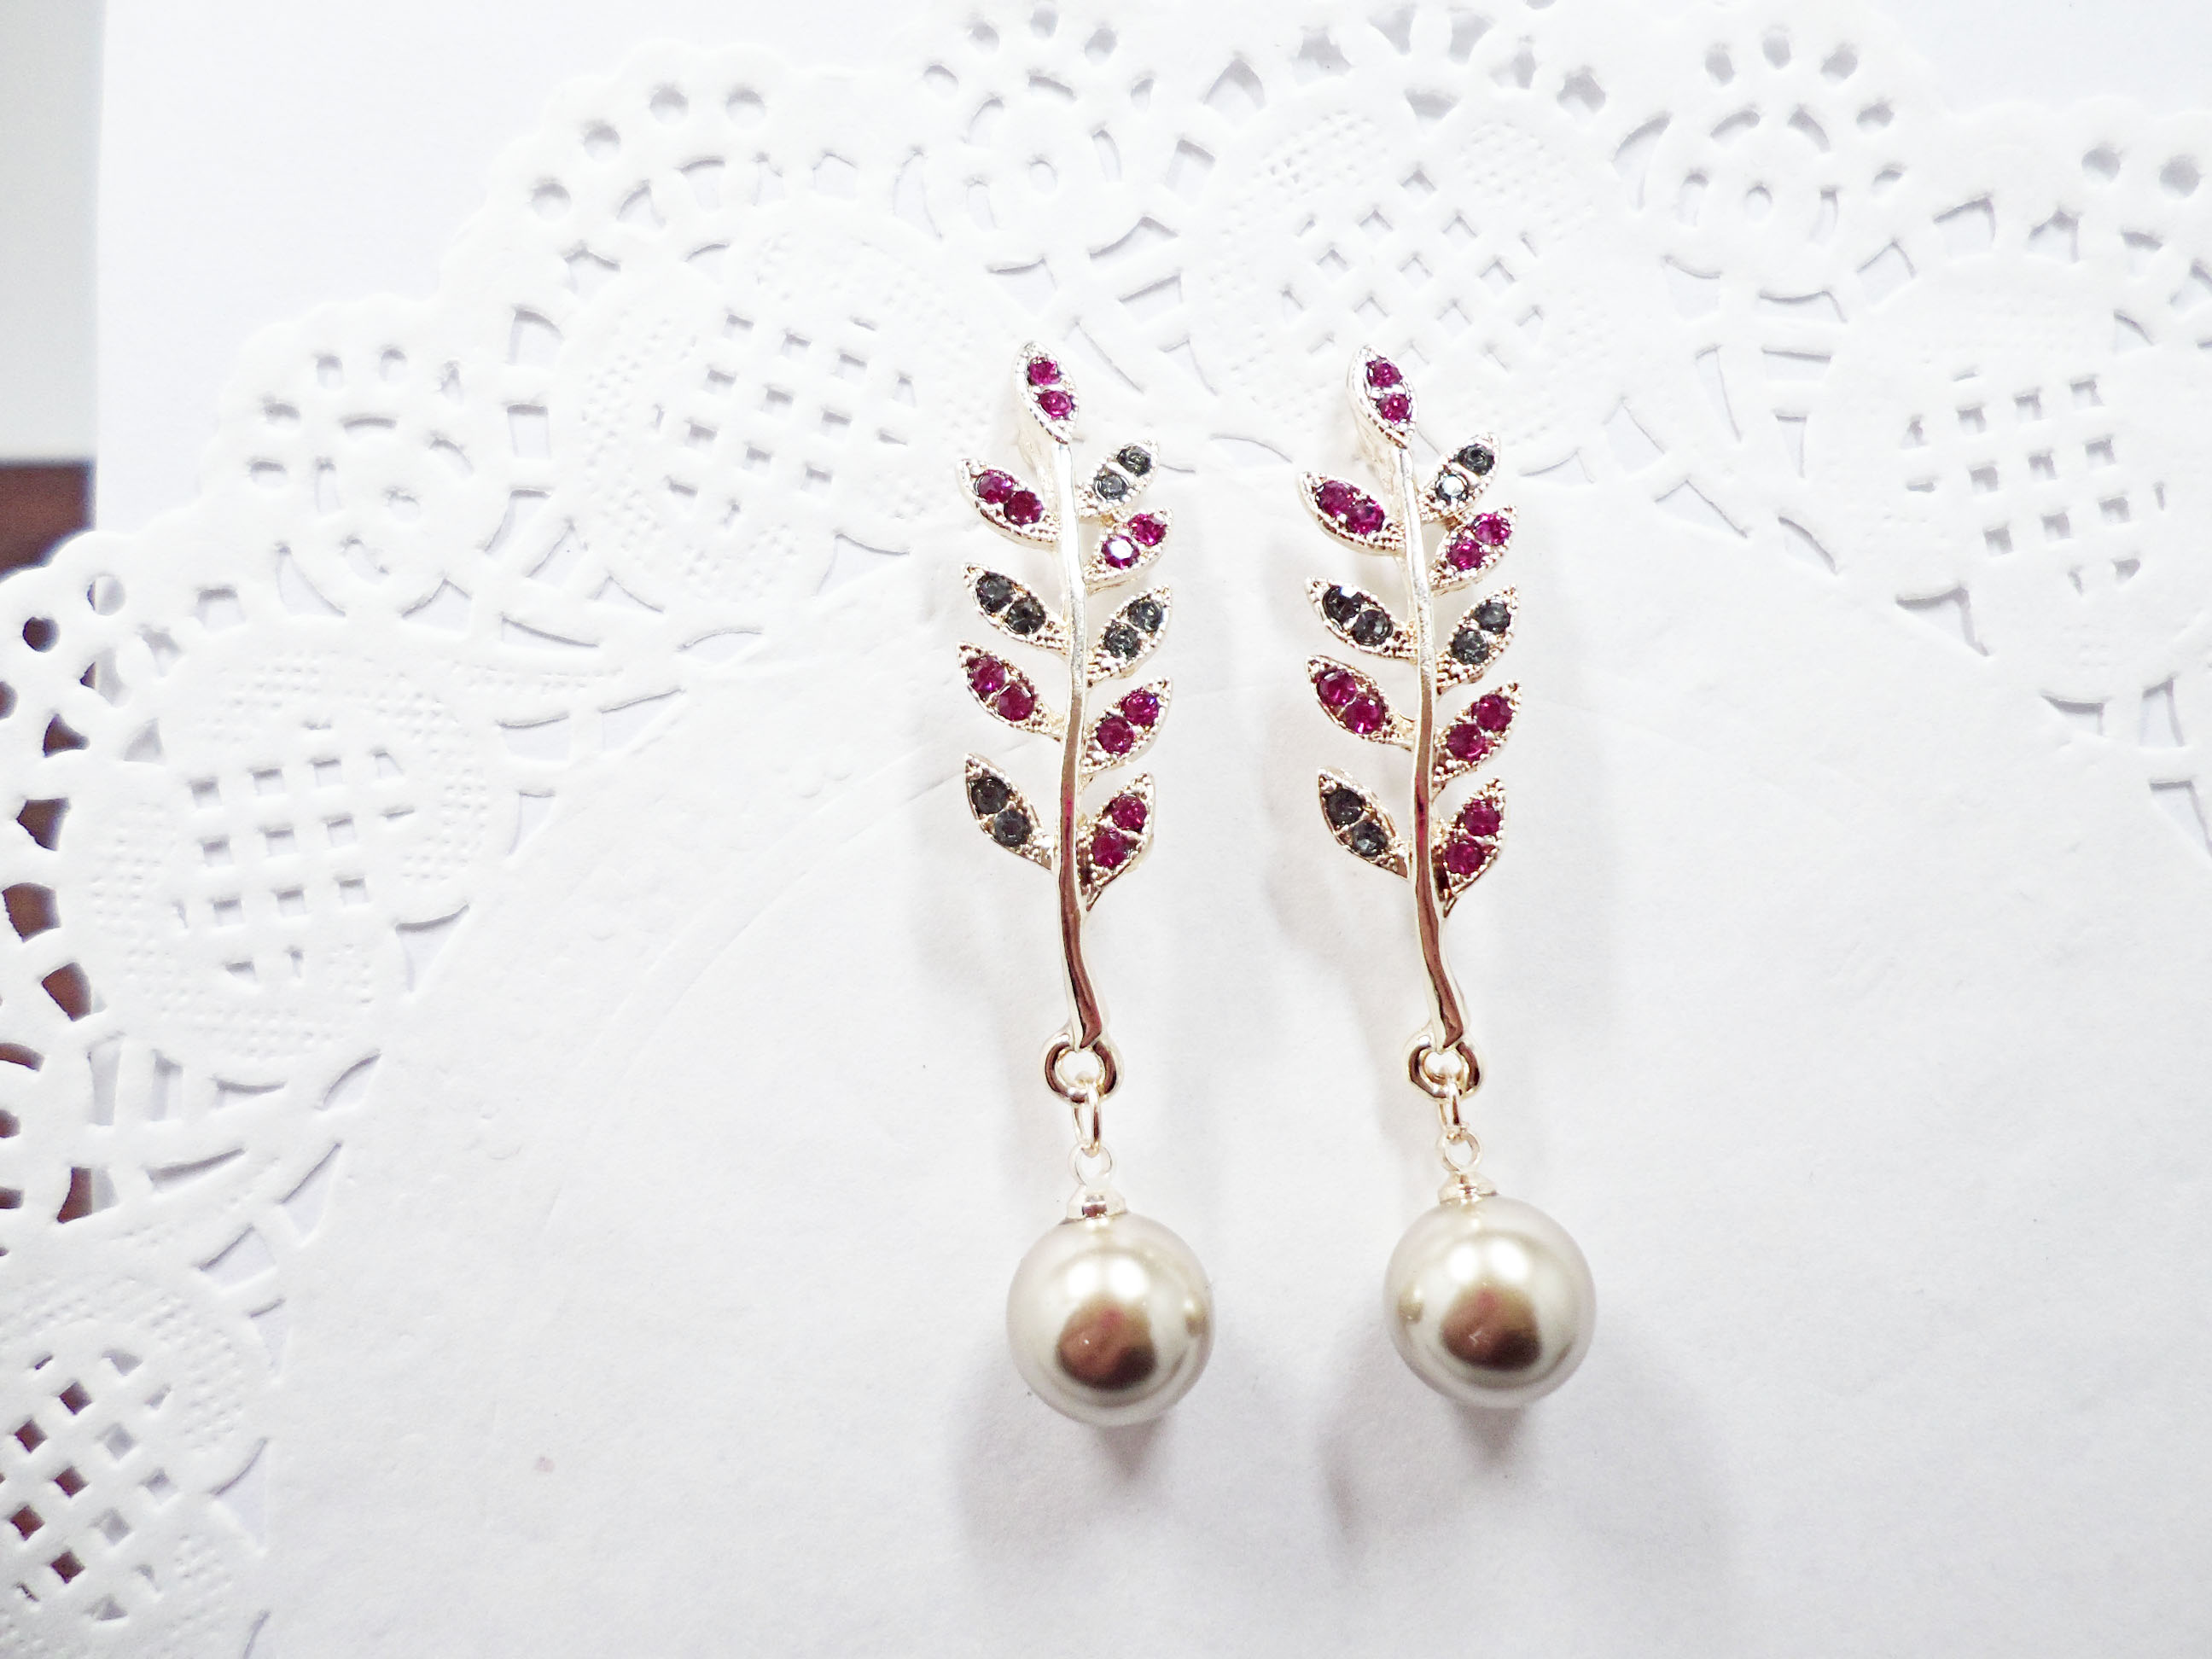 Wholesale Fashion Jewelry Pearl Pendant Leaves Branches Earrings Temperament Women Alloy Earrings For Female Gift Water Drop Earrings VGE160 4